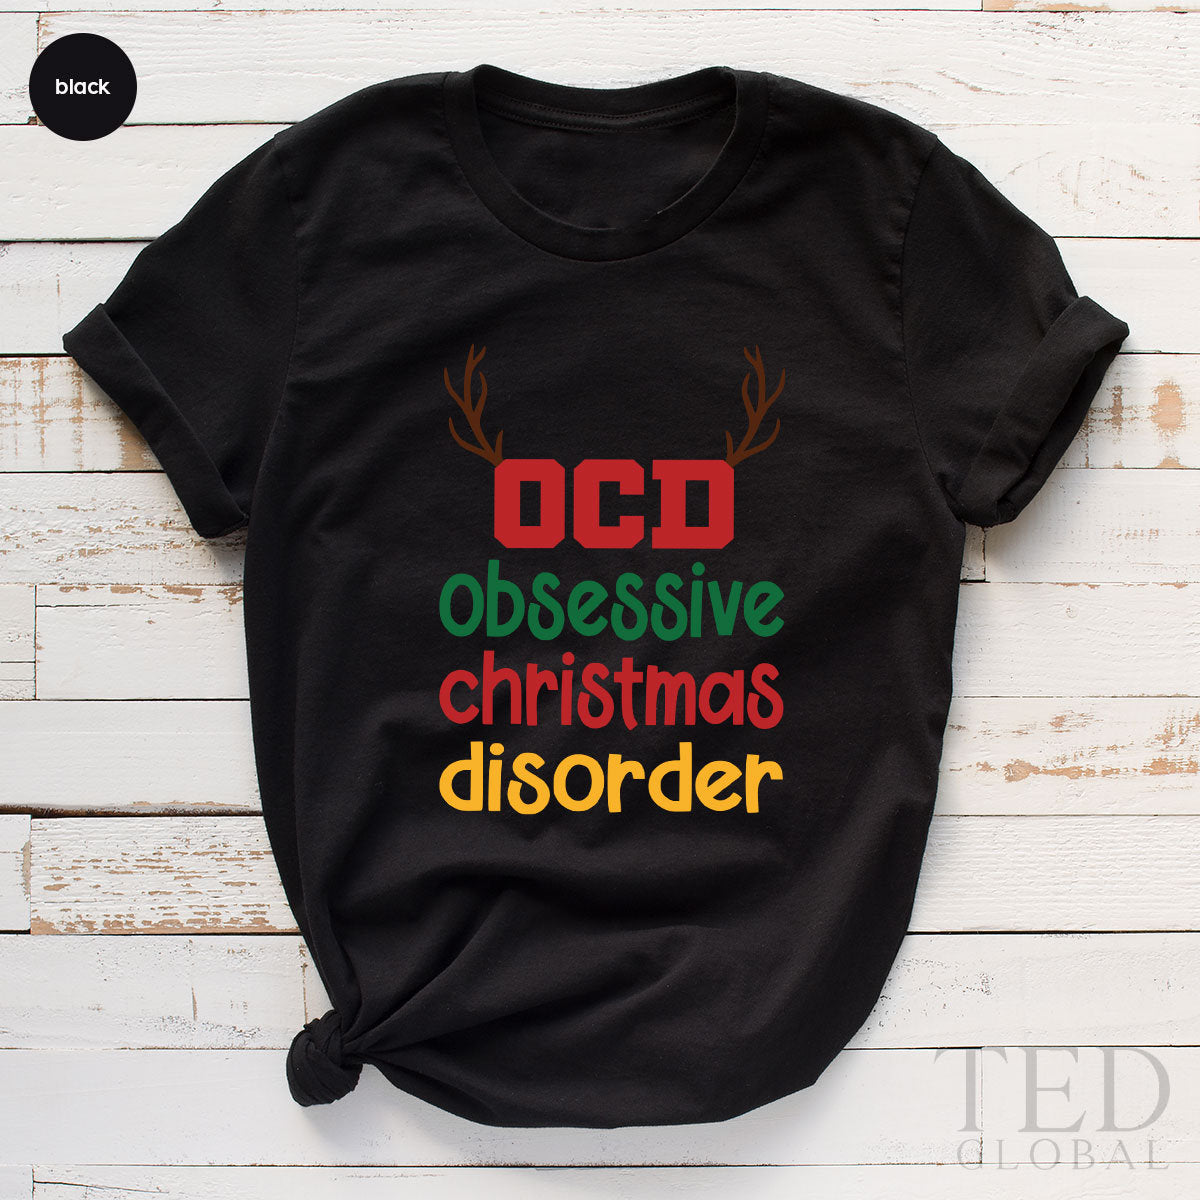 Cute Obsessive Christmas Disorder T-Shirt, Funny OCD T Shirt, Christmas Shirts, Holiday Shirt, Family Christmas TShirt, Gift For Christmas - Fastdeliverytees.com